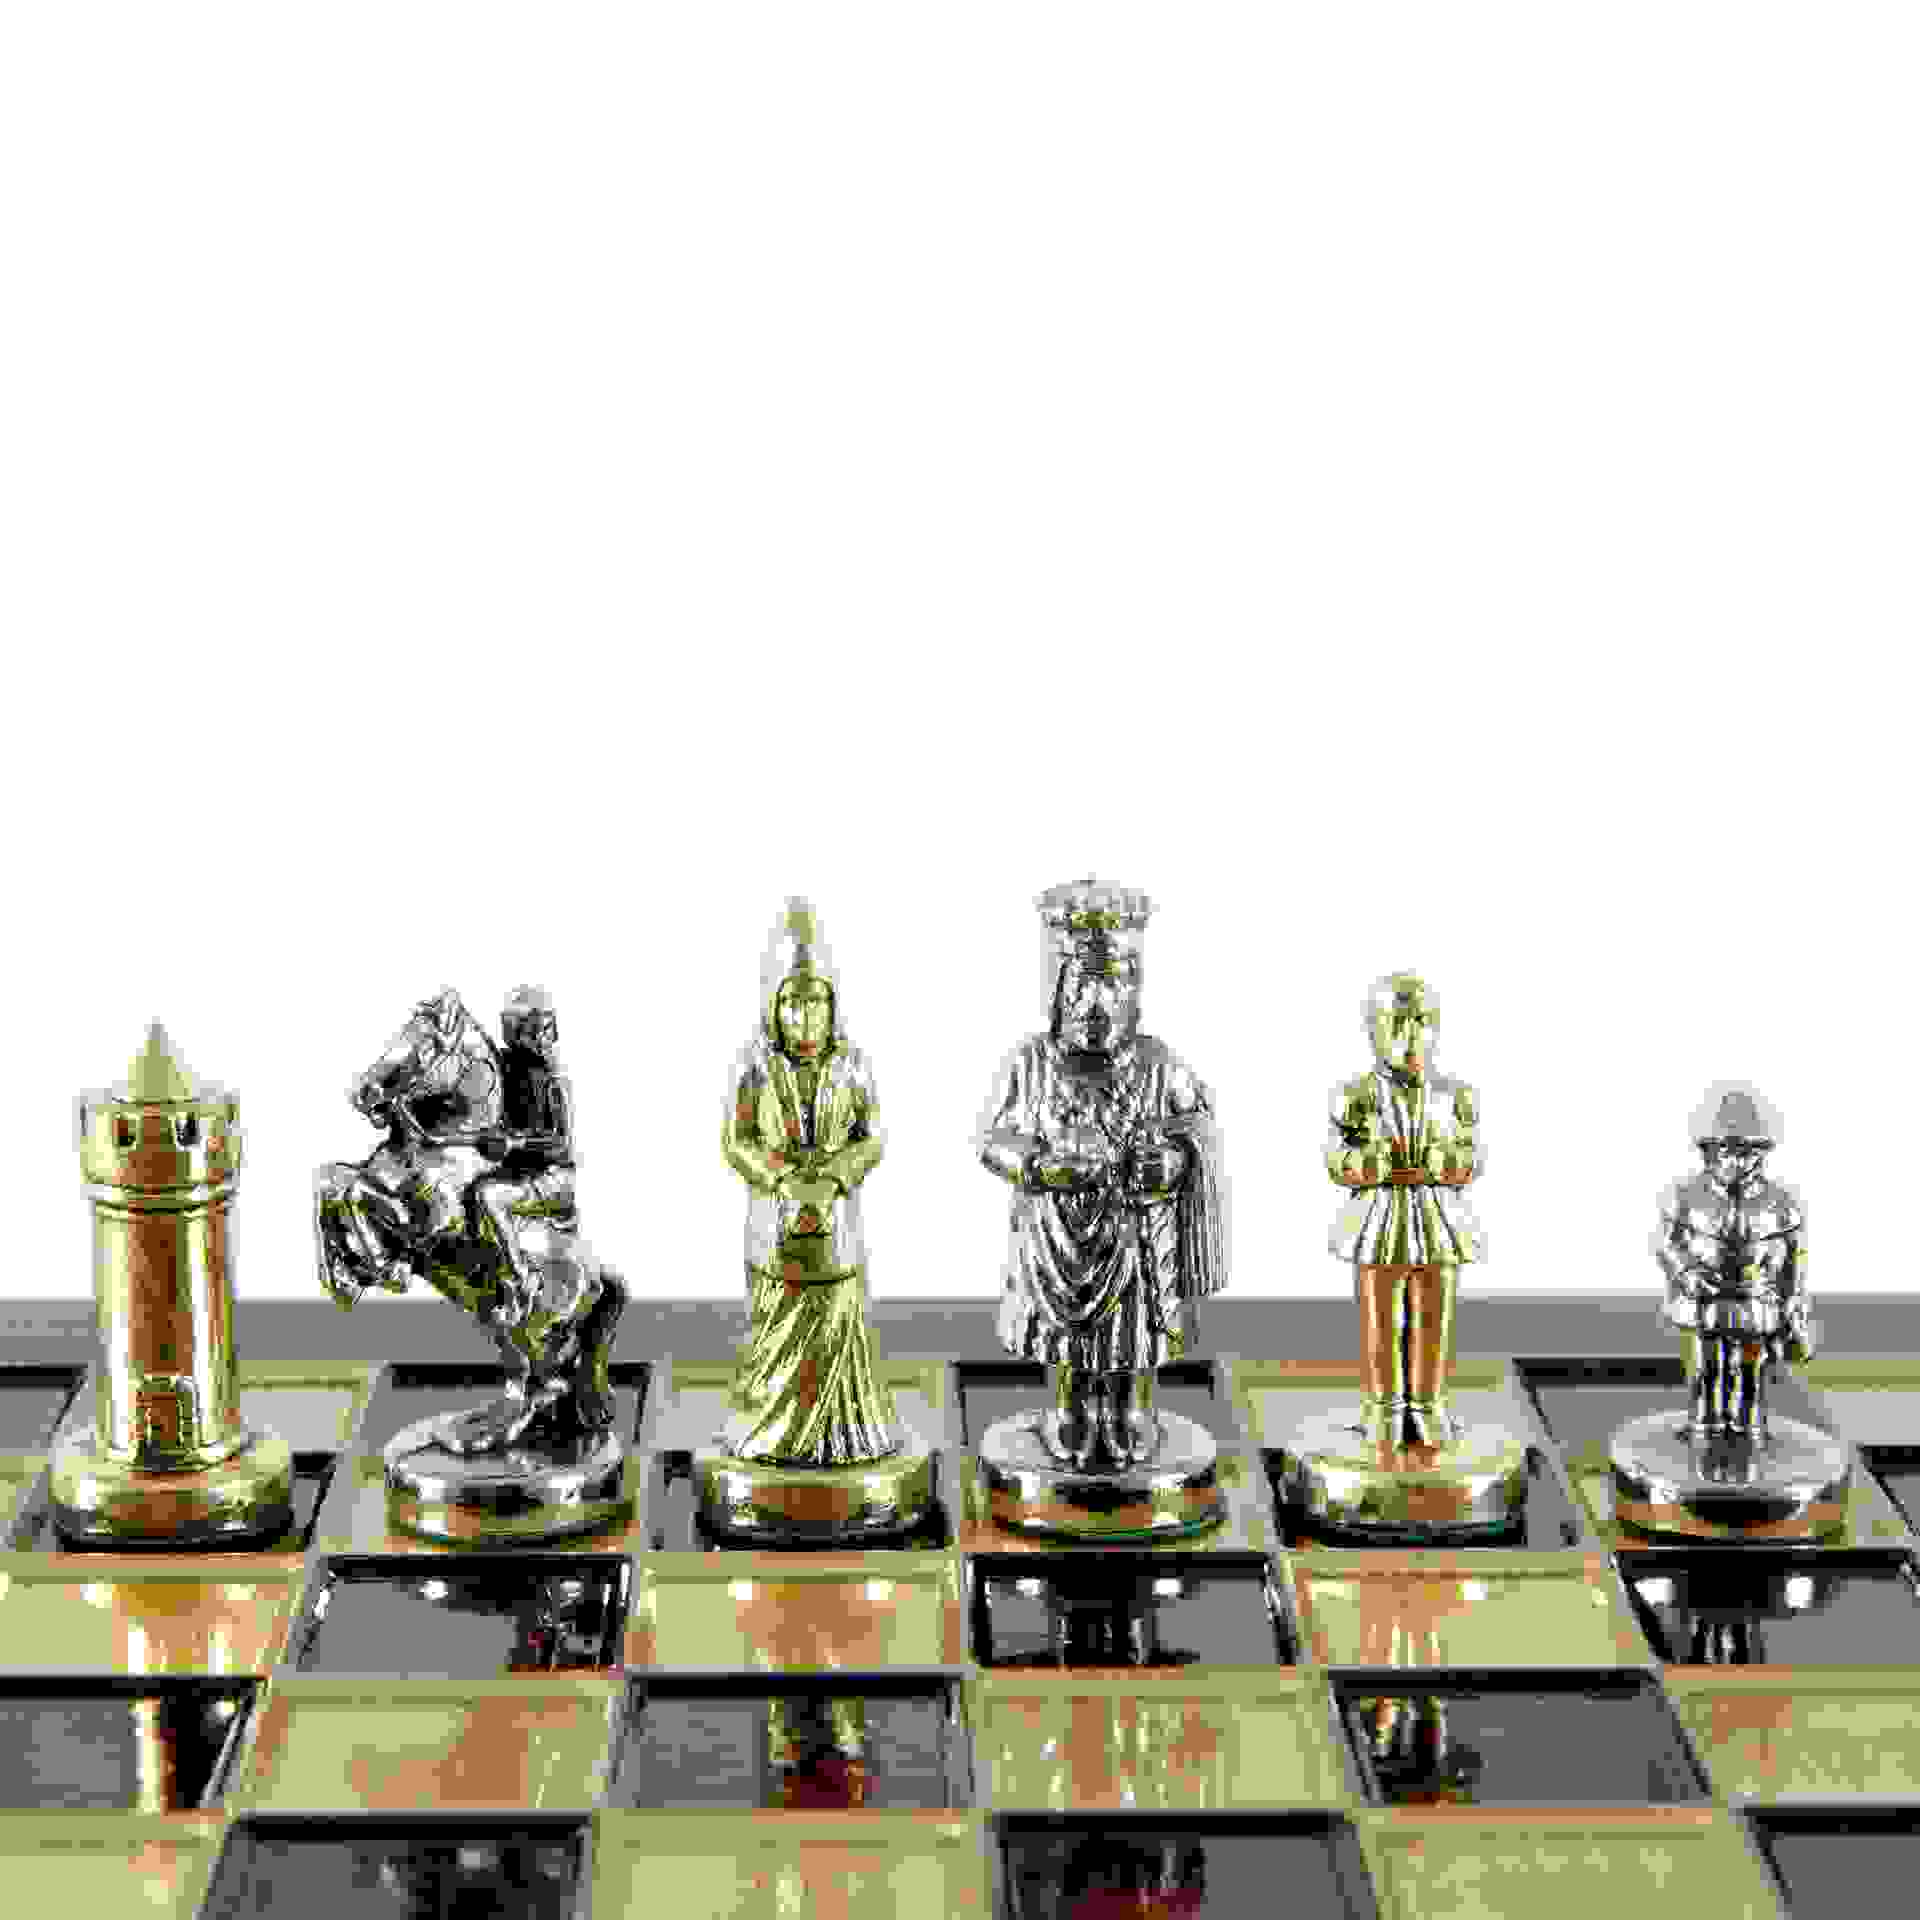 Byzantine Metal Chess Set 20x20cm Red